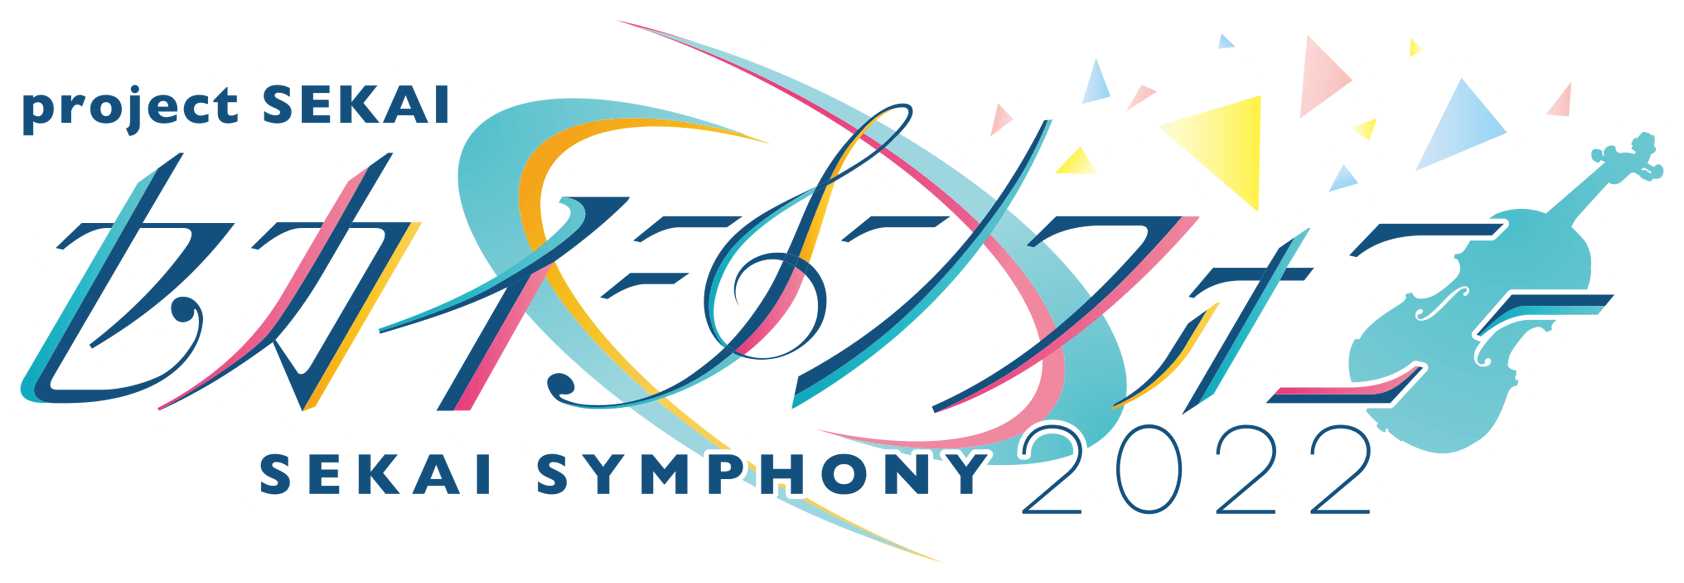 Sekaisymphony2022 logo.png